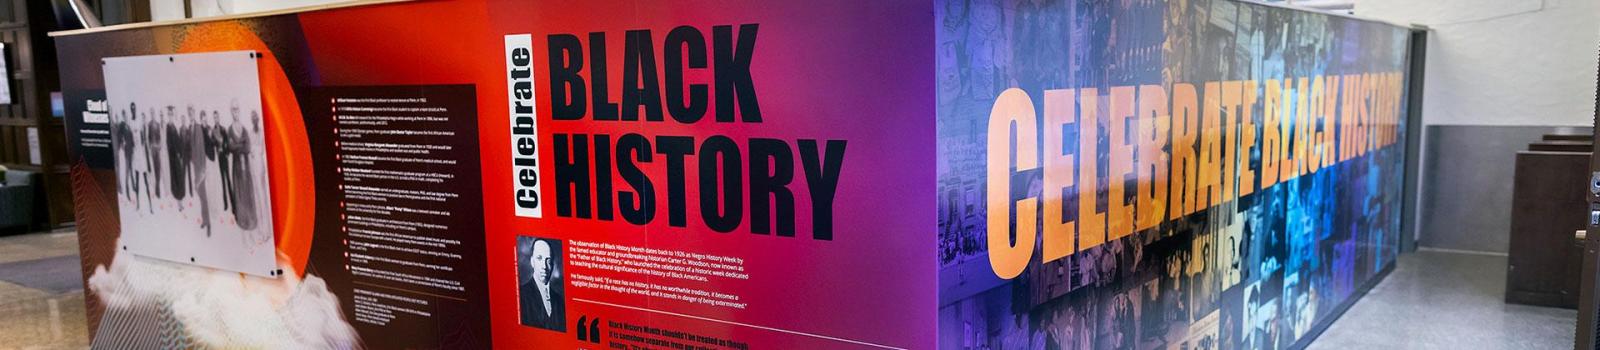 A large, colorful rectangular exhibition celebrates Black History Month at Makku.